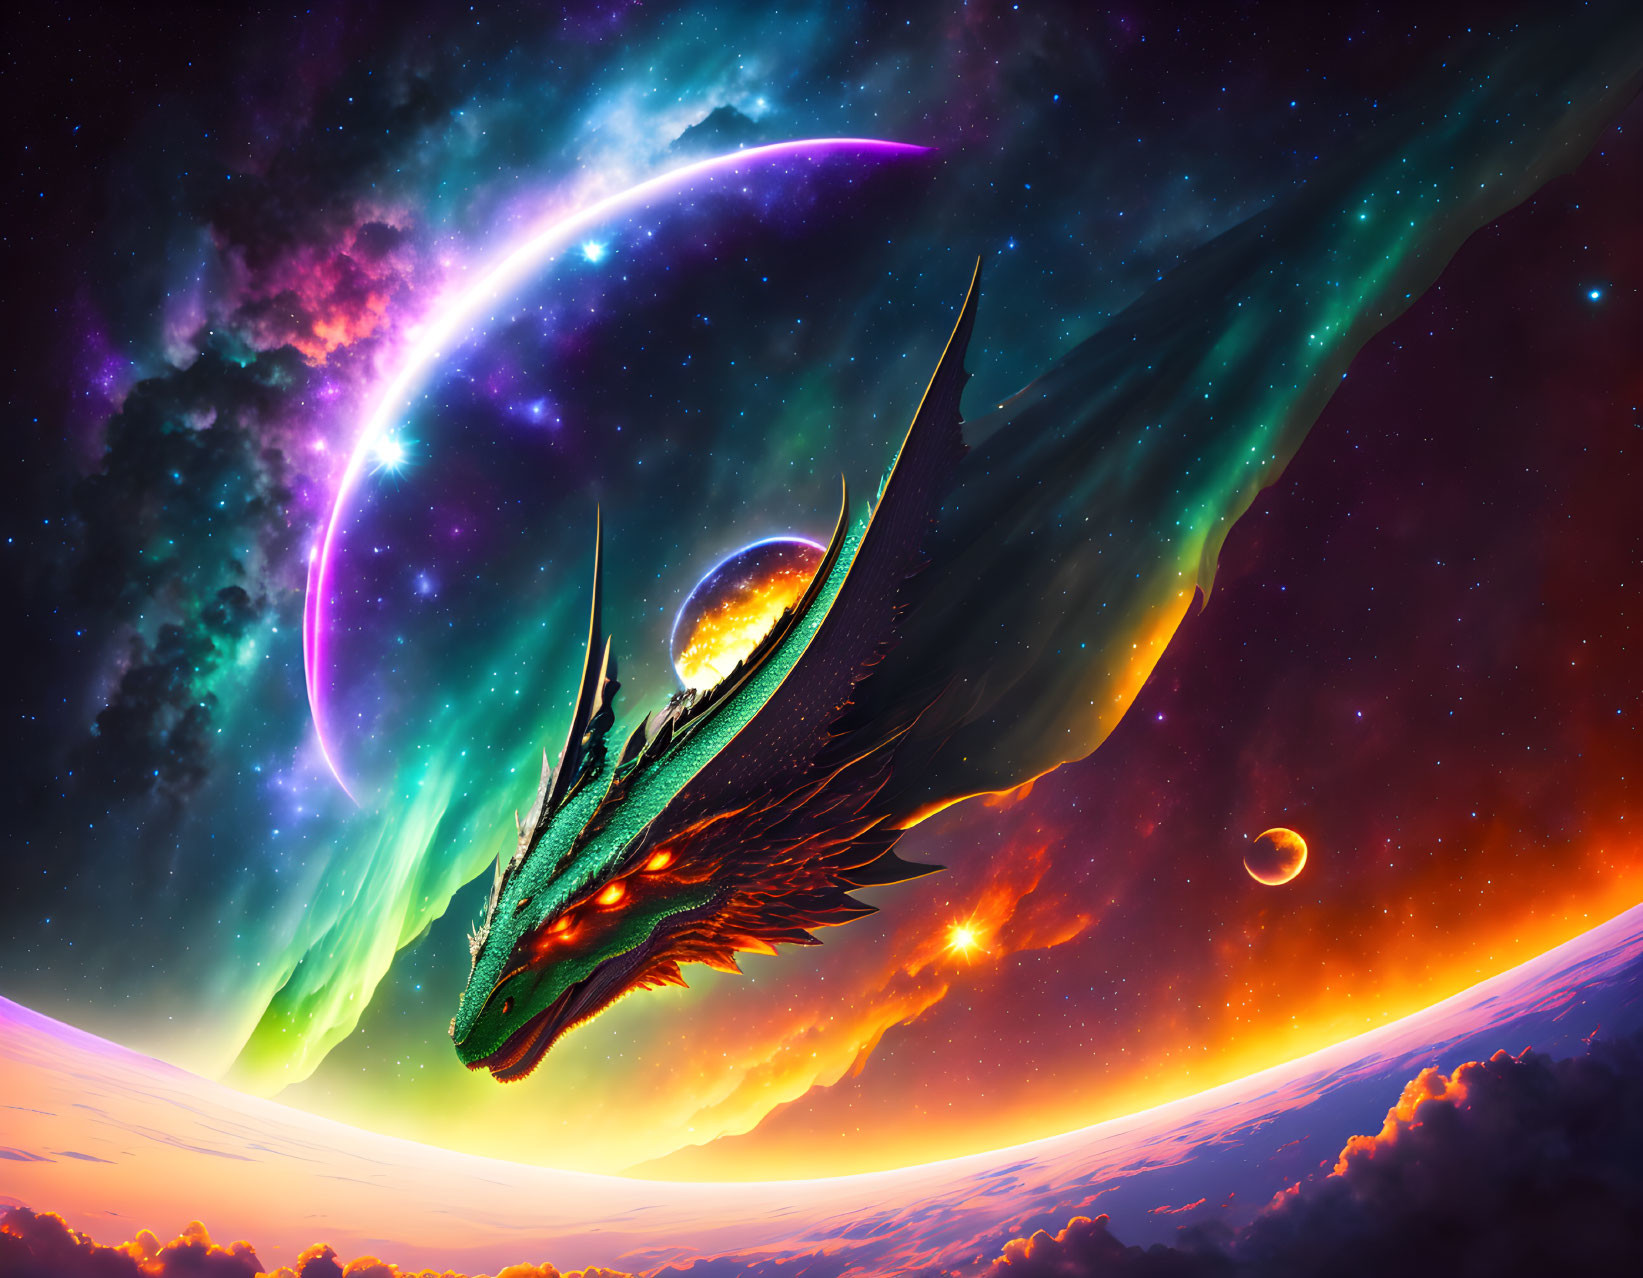 Majestic dragon flying through vibrant fantasy space